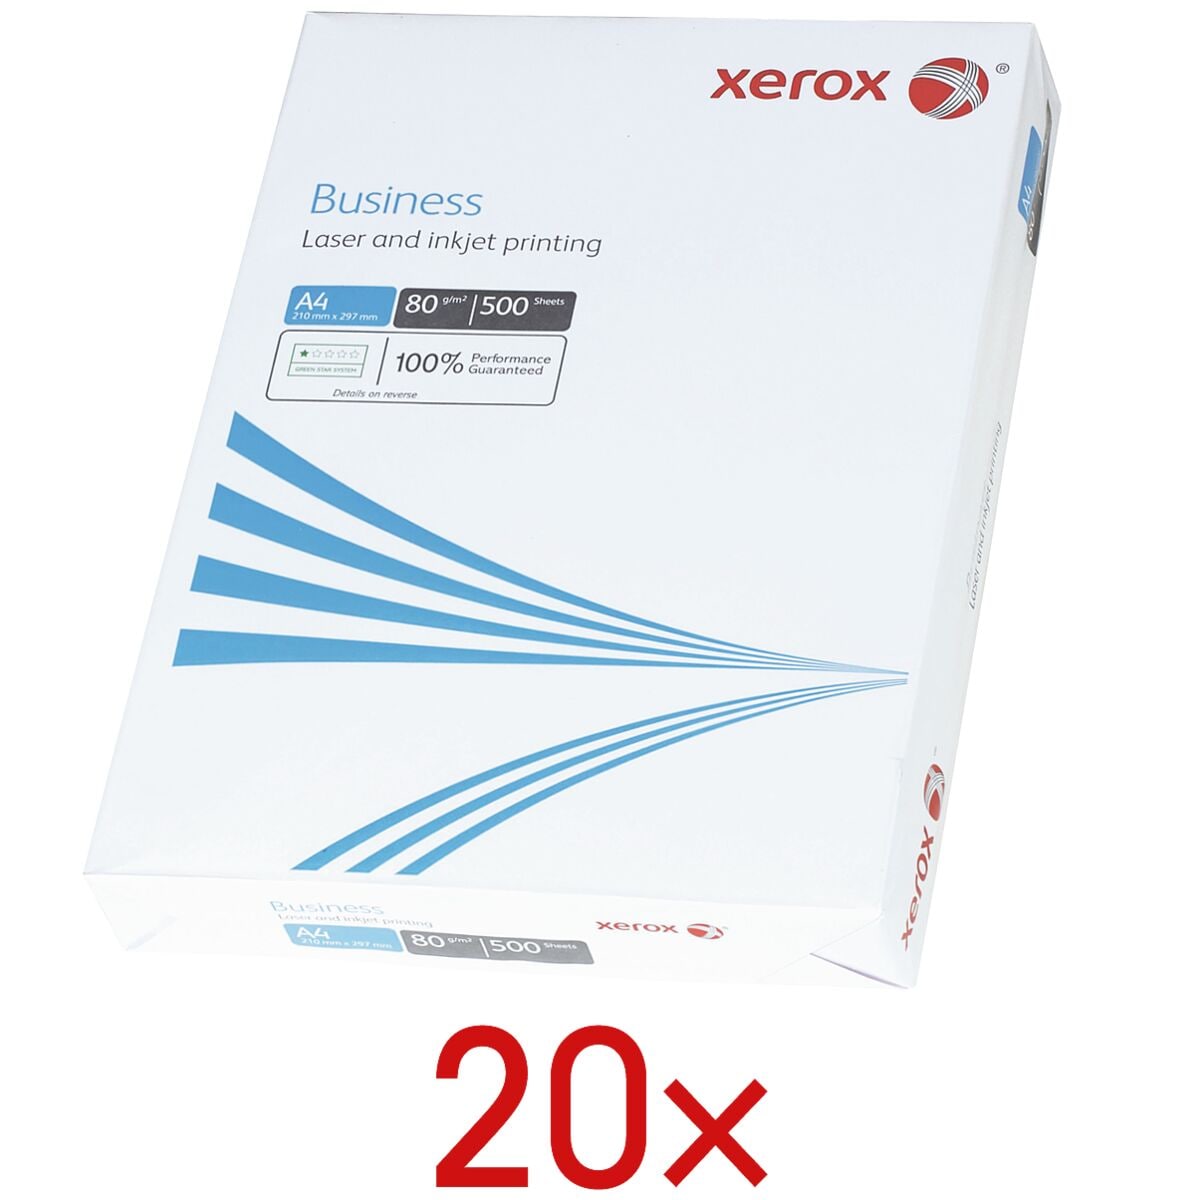 20x Multifunktionales Druckerpapier A4 Xerox Business - 10000 Blatt gesamt